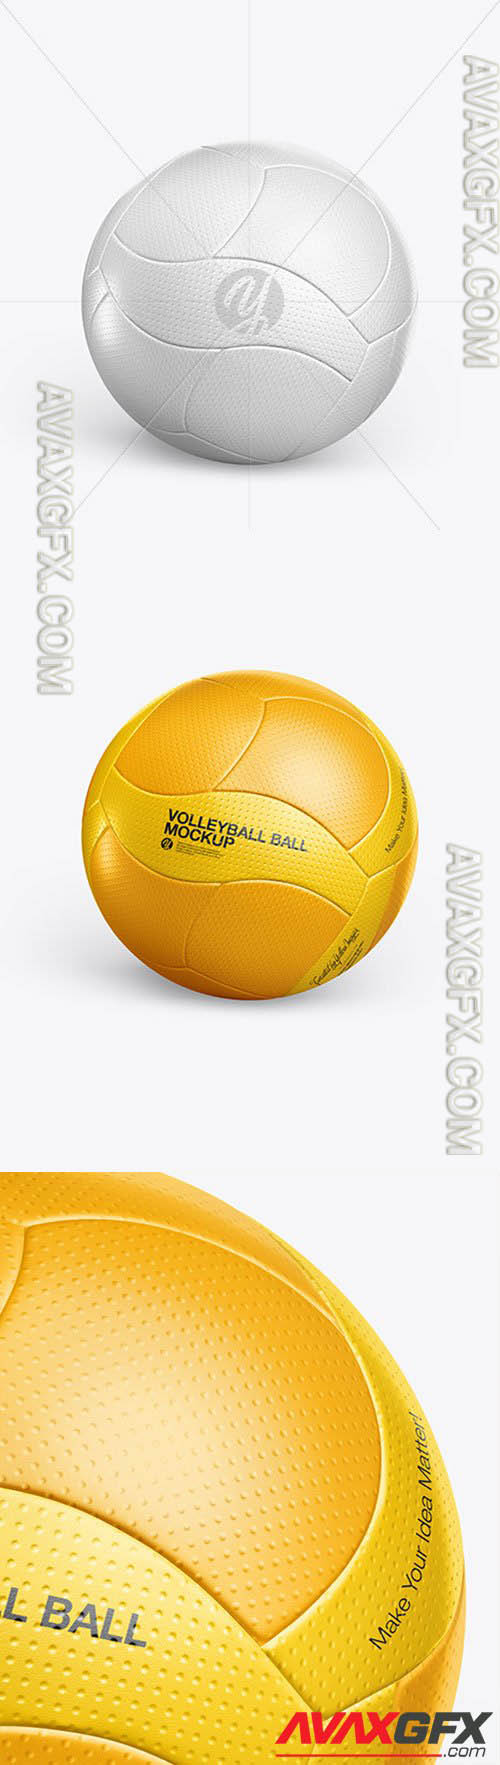 Volleyball Ball Mockup 61274